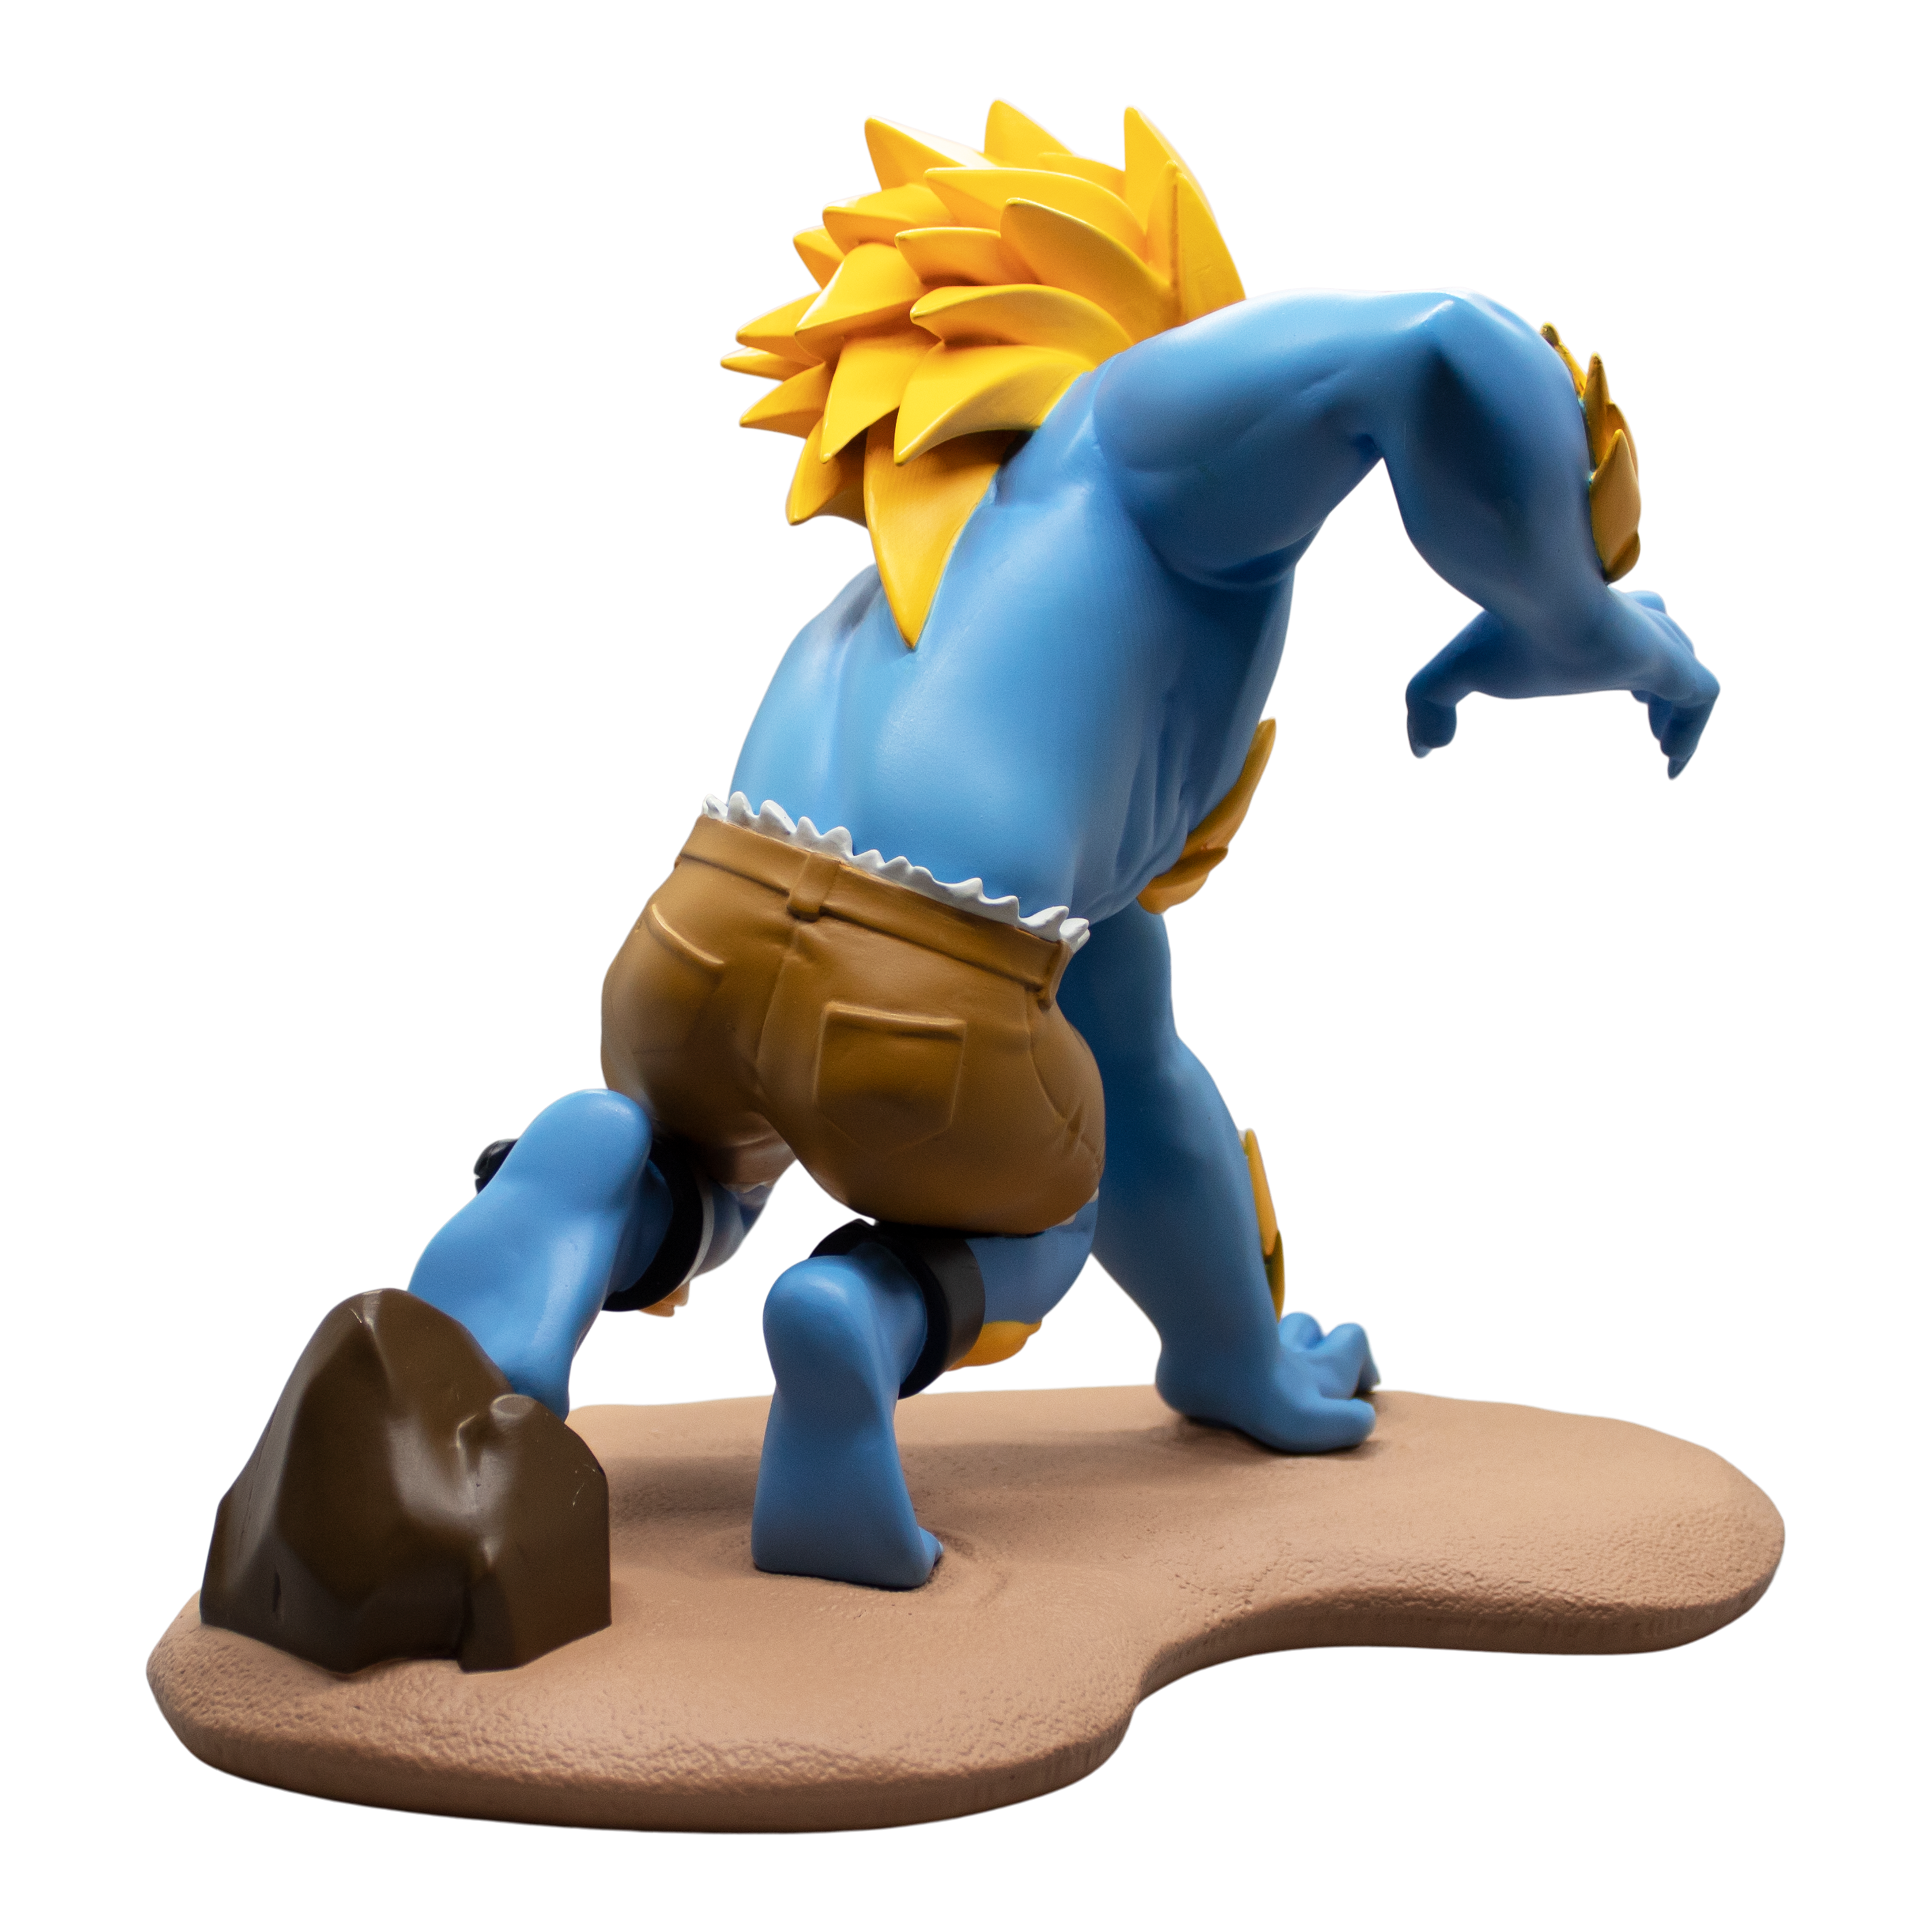 NTWRK - Street Fighter Blanka Player 2 Polystone Statue (Exclusive)